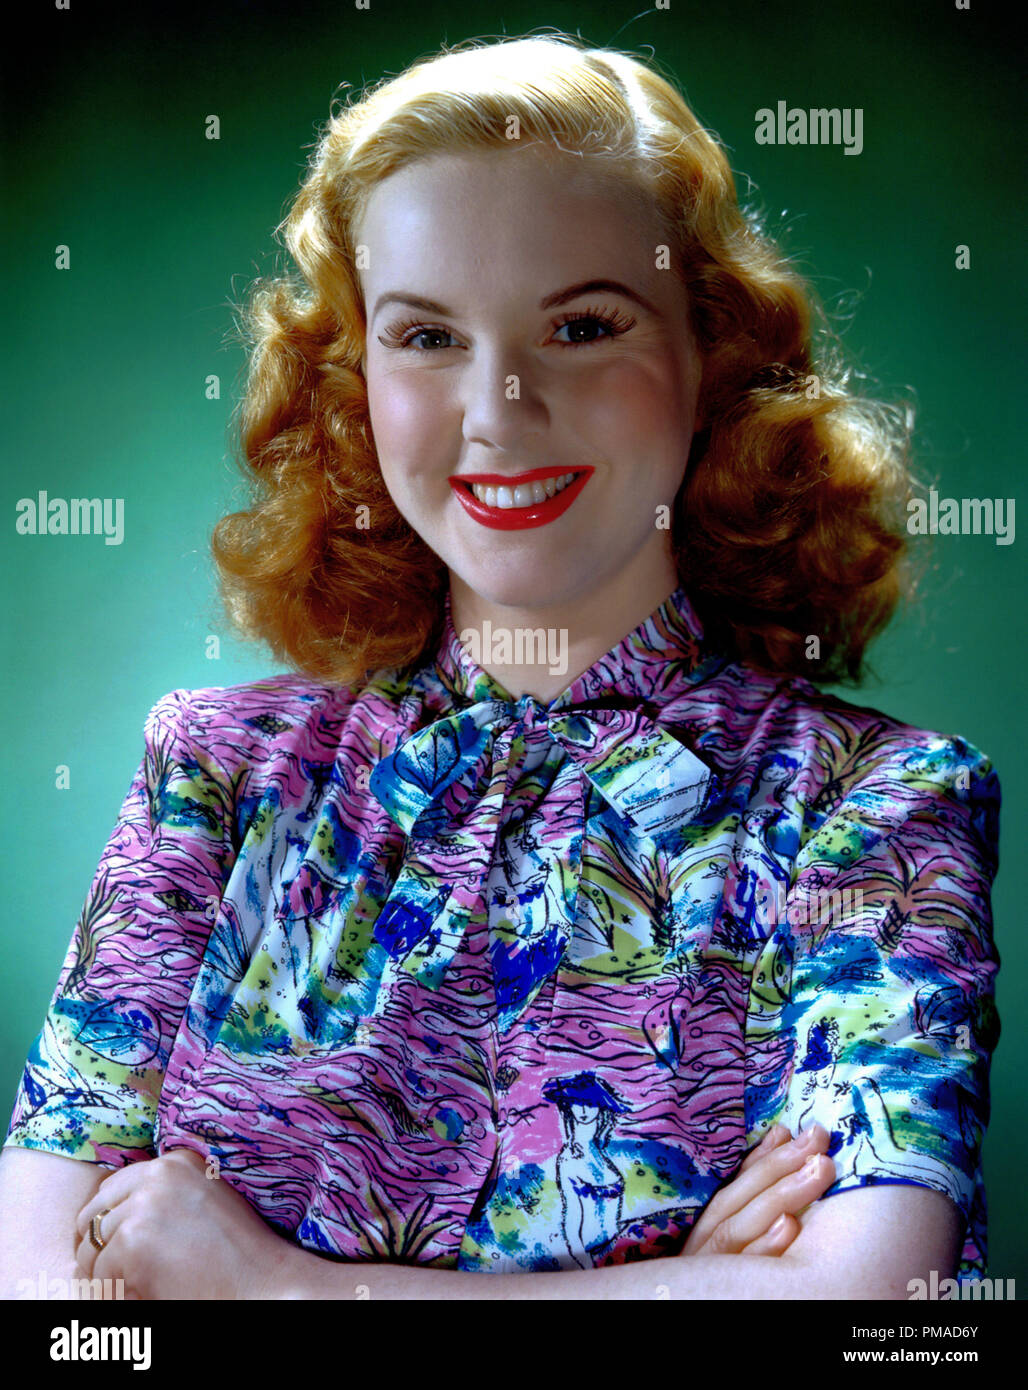 Deanna Durbin circa 1941 File Reference # 32368 666THA Stock Photo